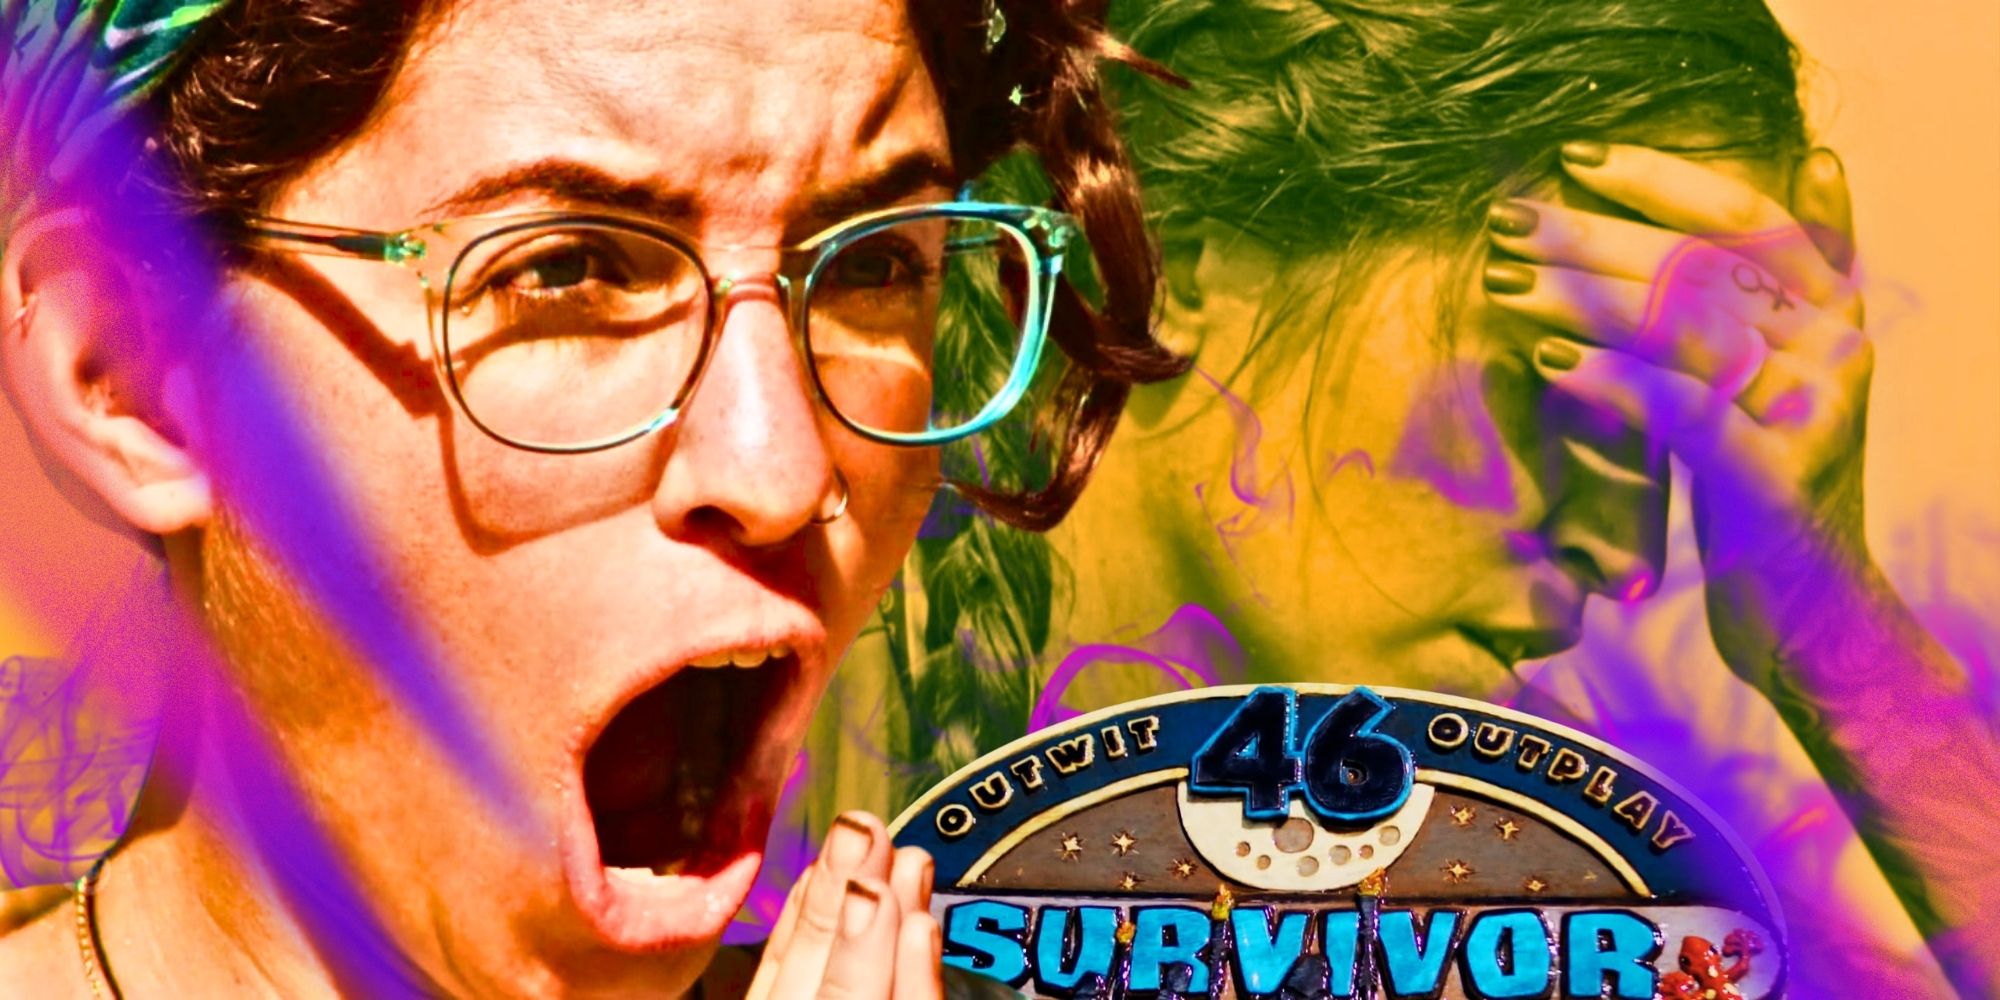 survivor 24 promo image featuring Liz Wilcox yelling